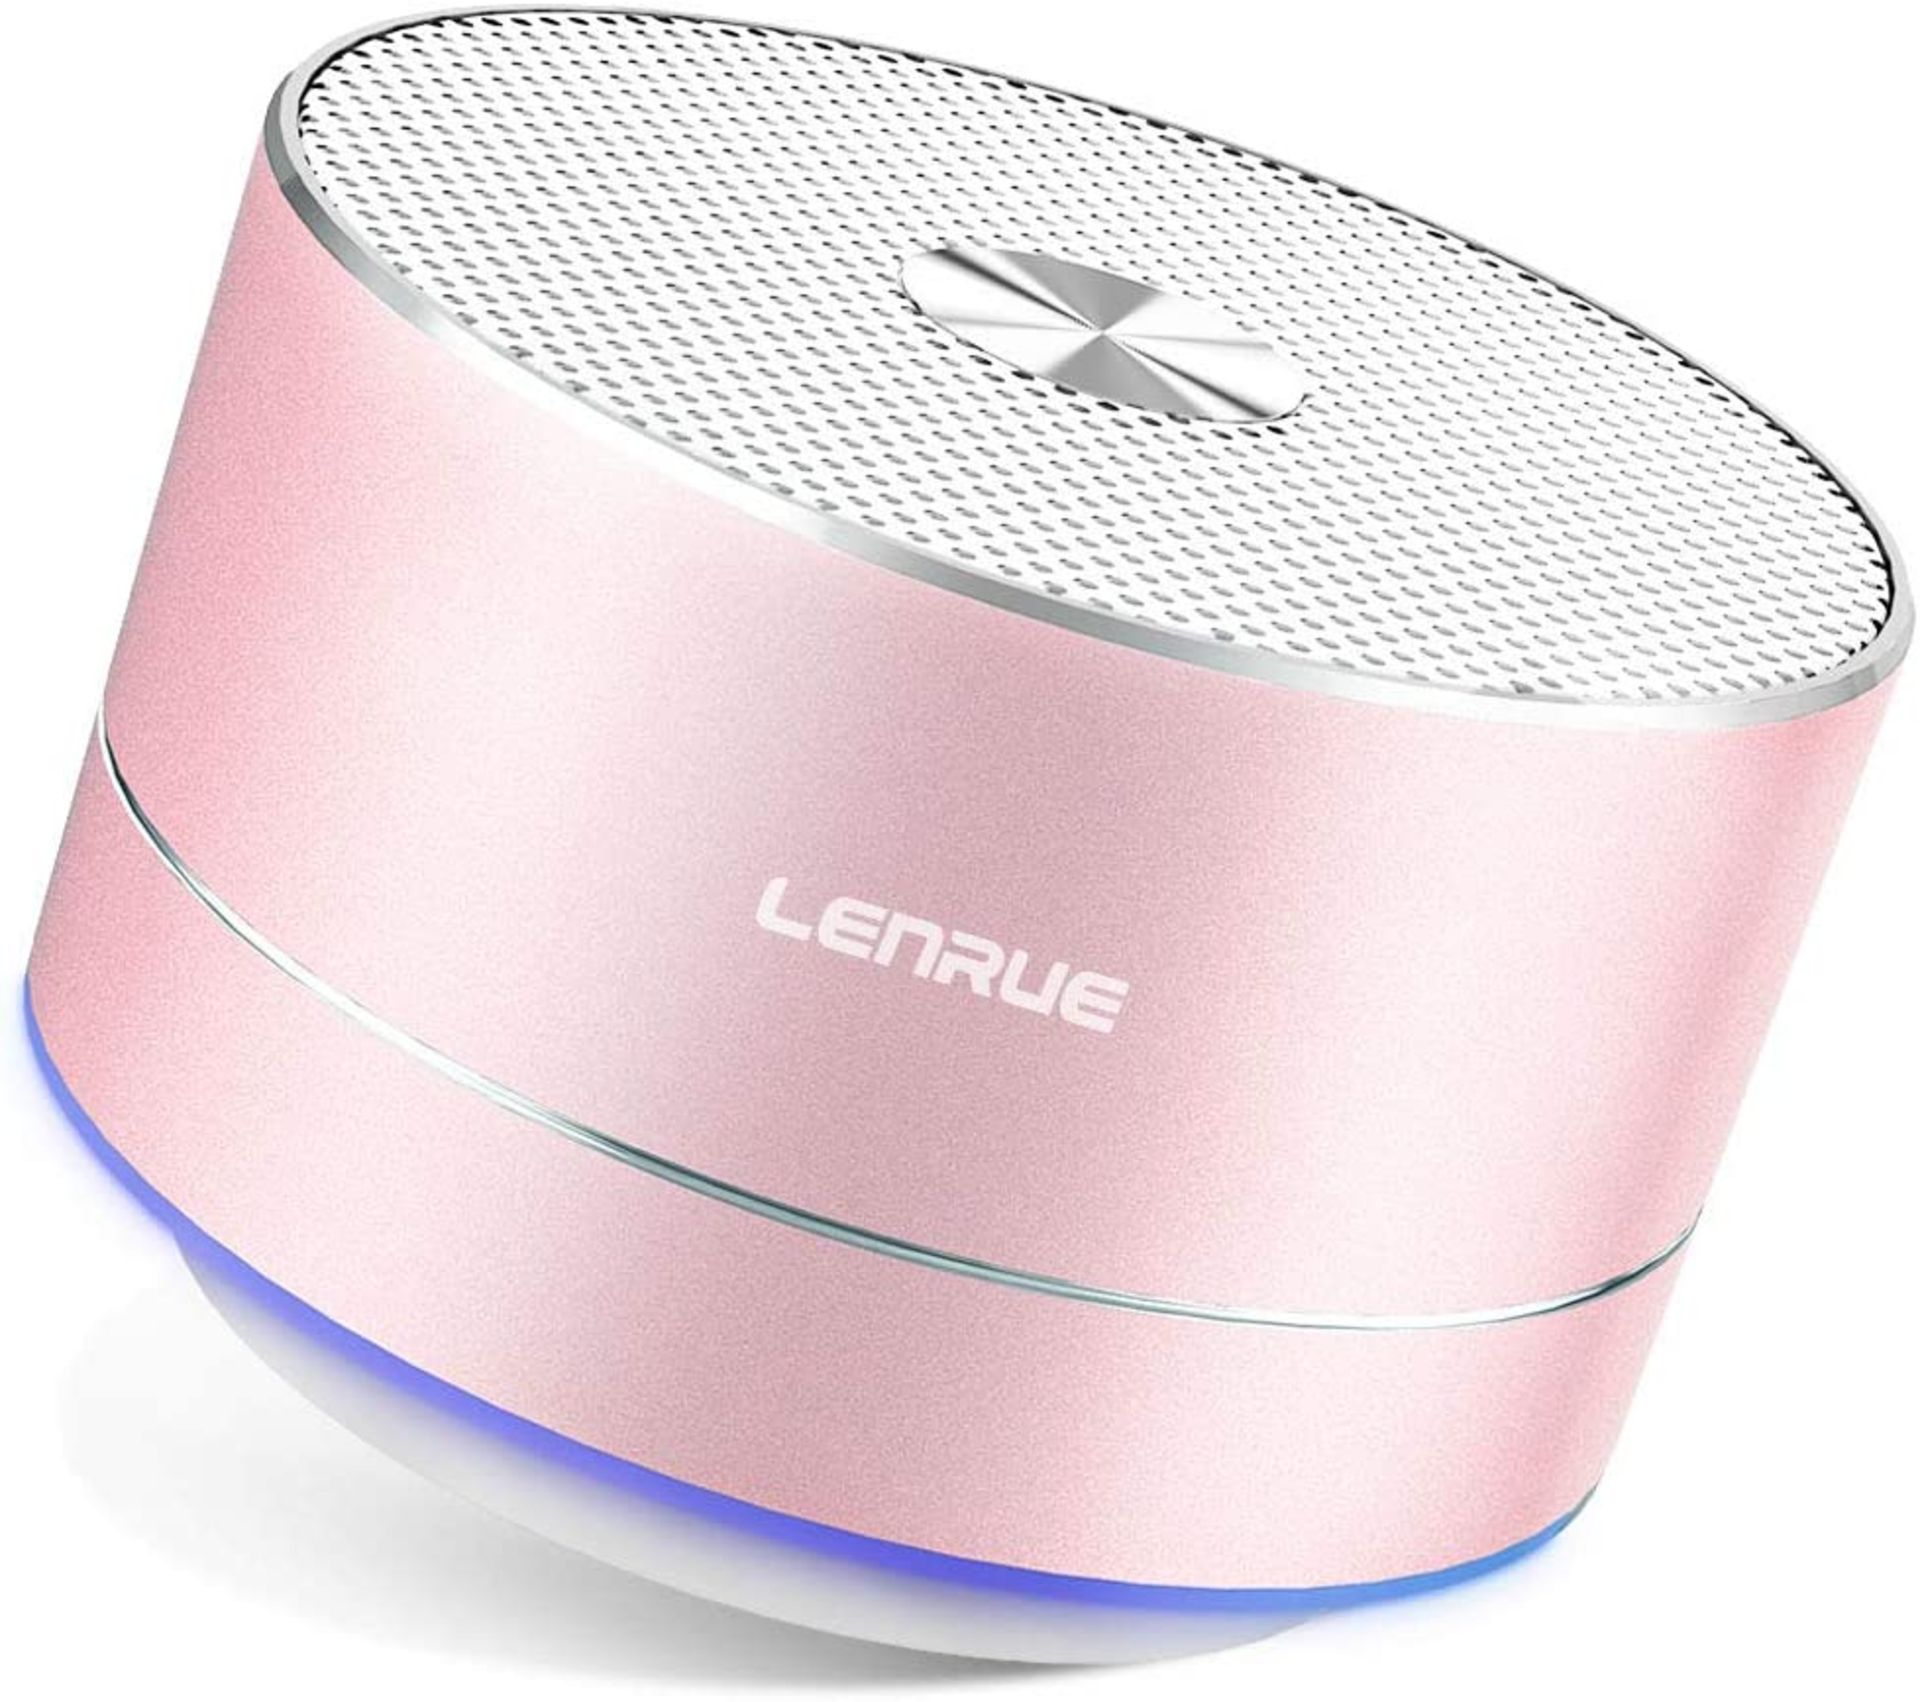 LENRUE Bluetooth Speaker, Mini Portable Speakers with LED Lights RRP £19.99